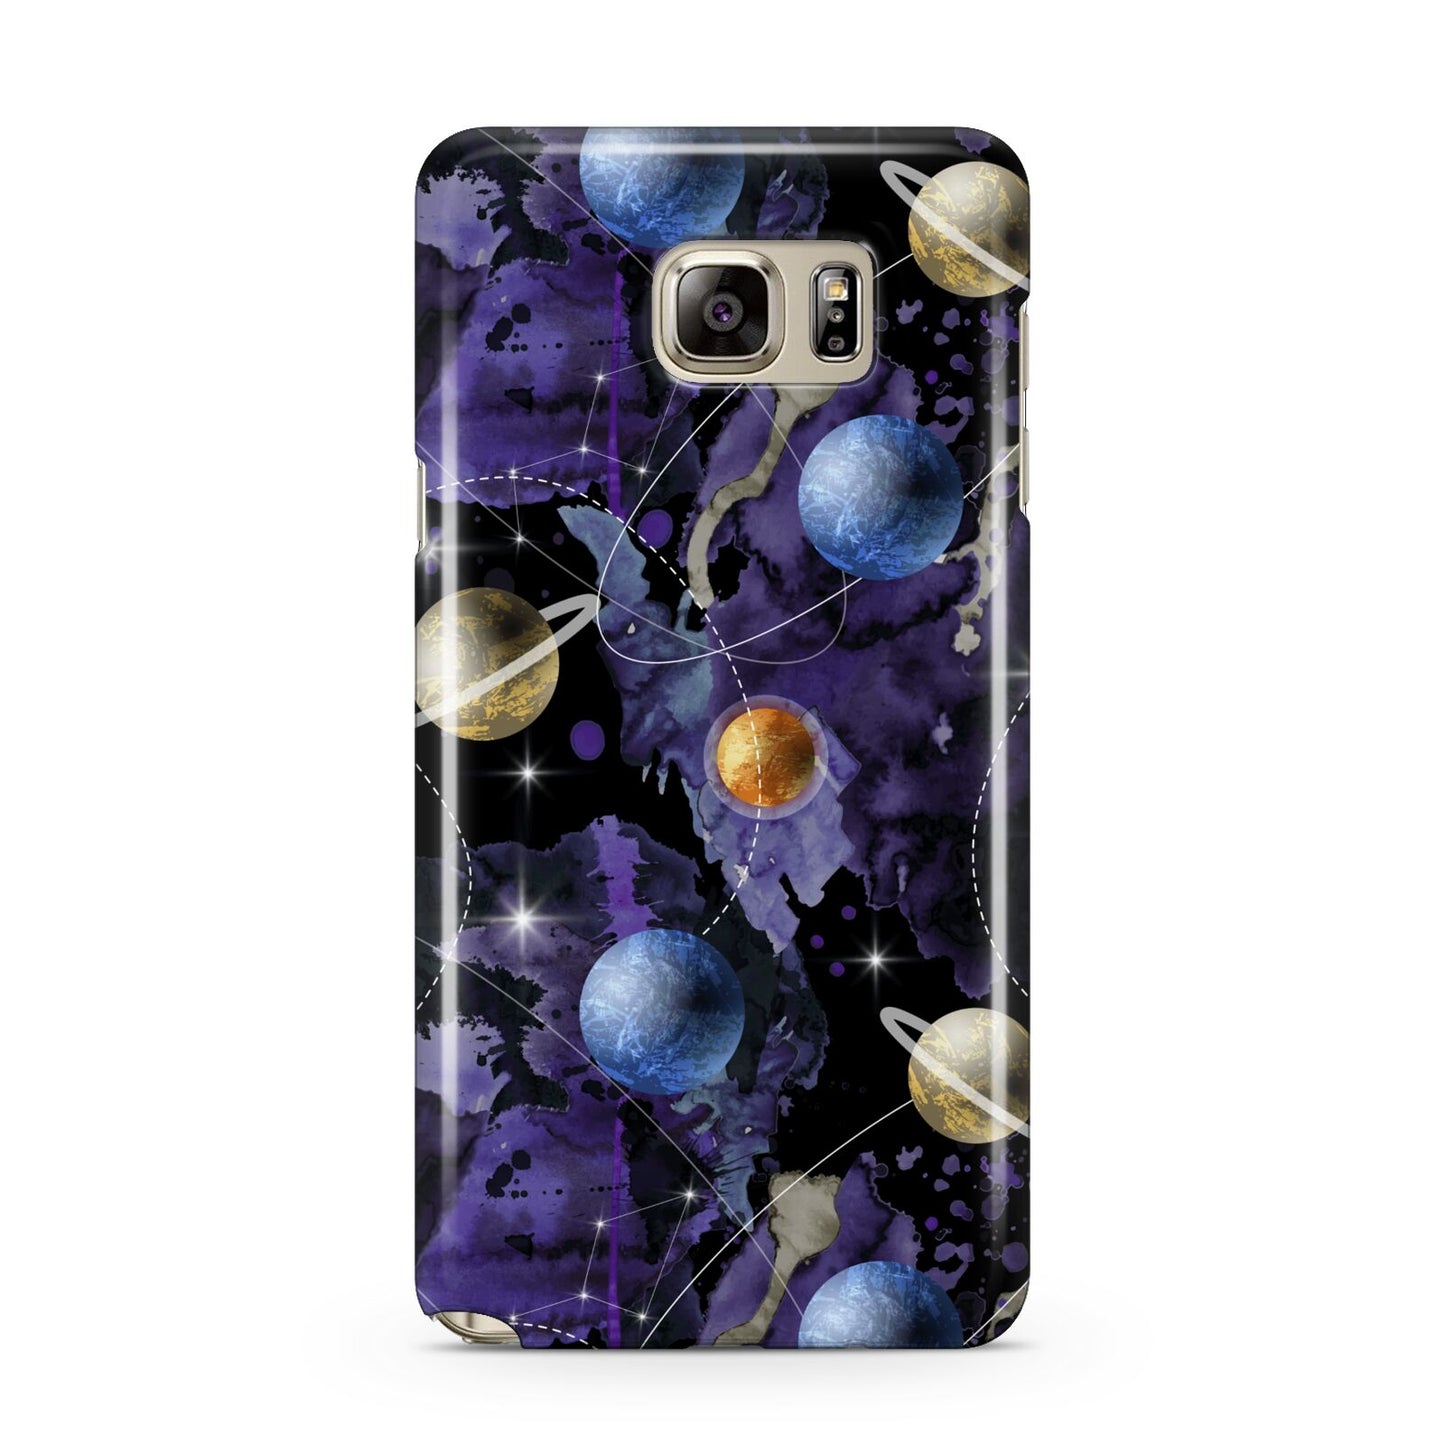 Planet Samsung Galaxy Note 5 Case